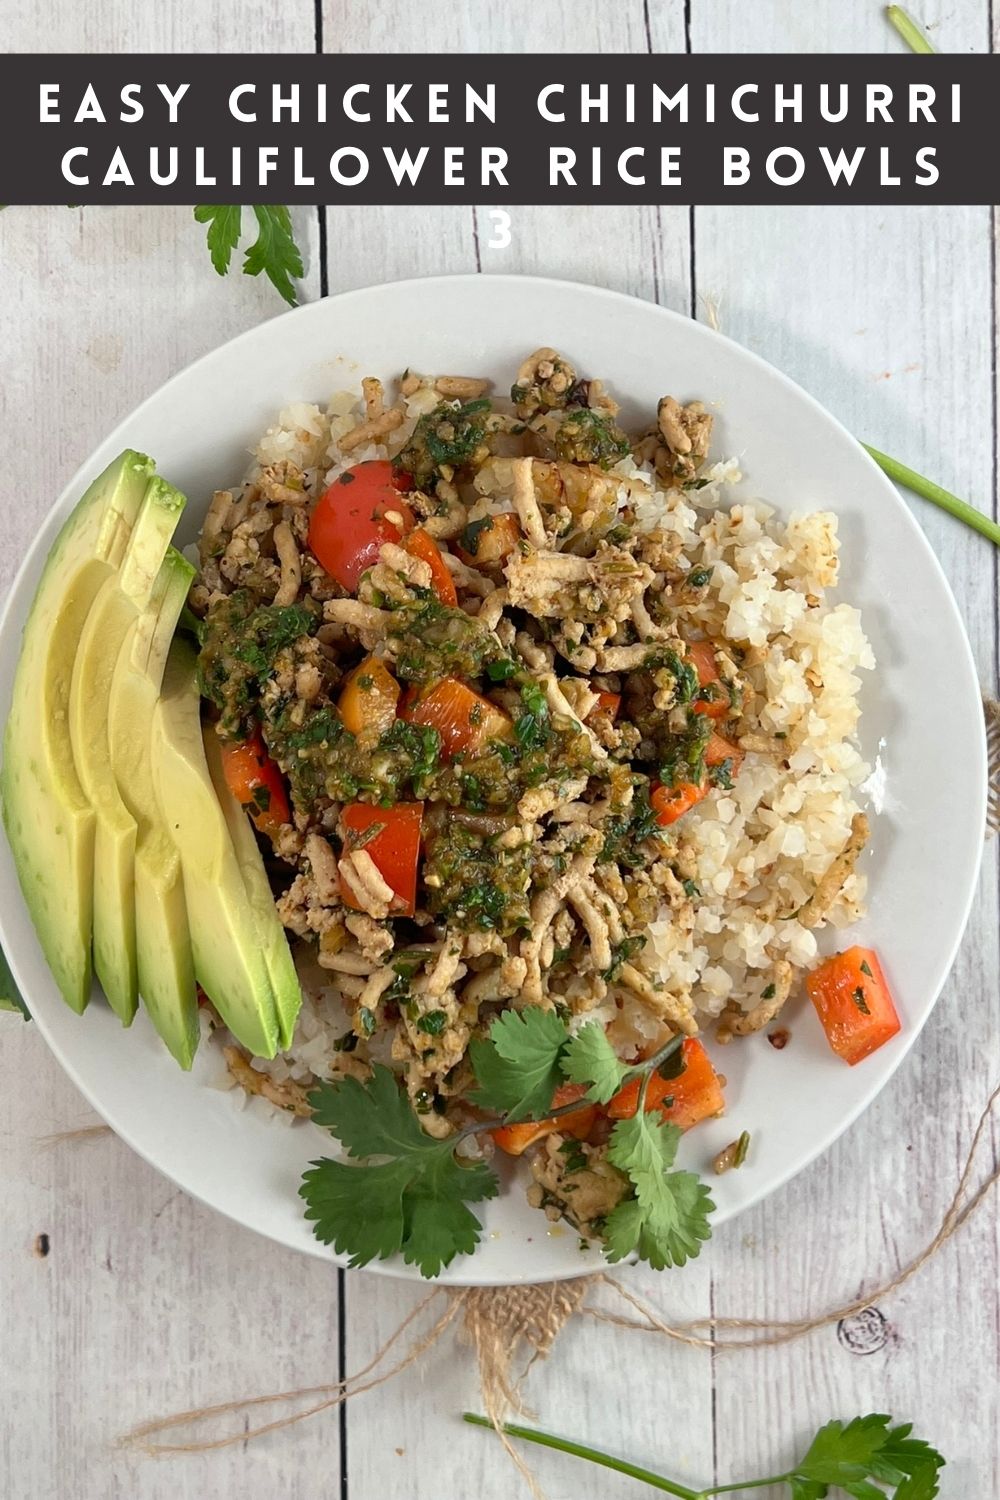 Easy Chicken Chimichurri Cauliflower Rice Bowls via @preventionrd